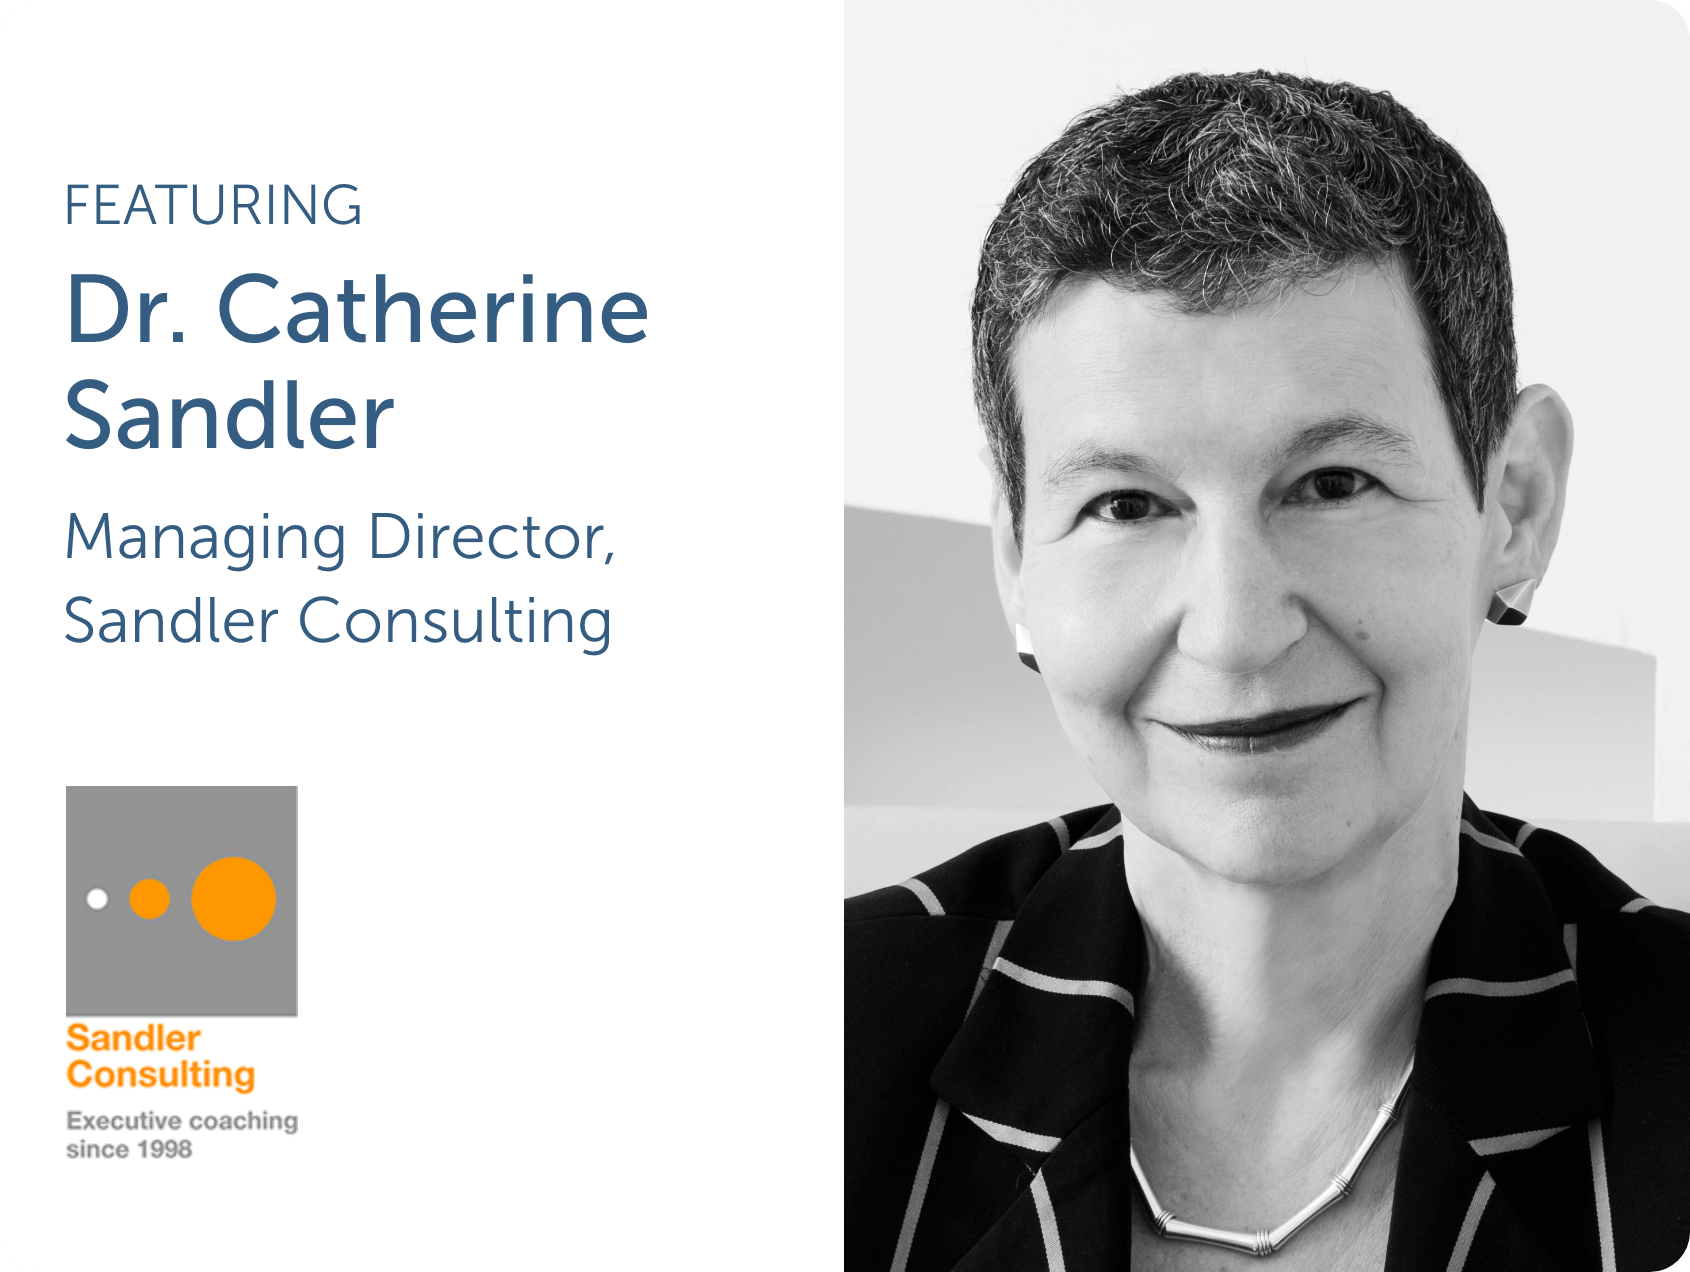 Dr. Catherine Sandler